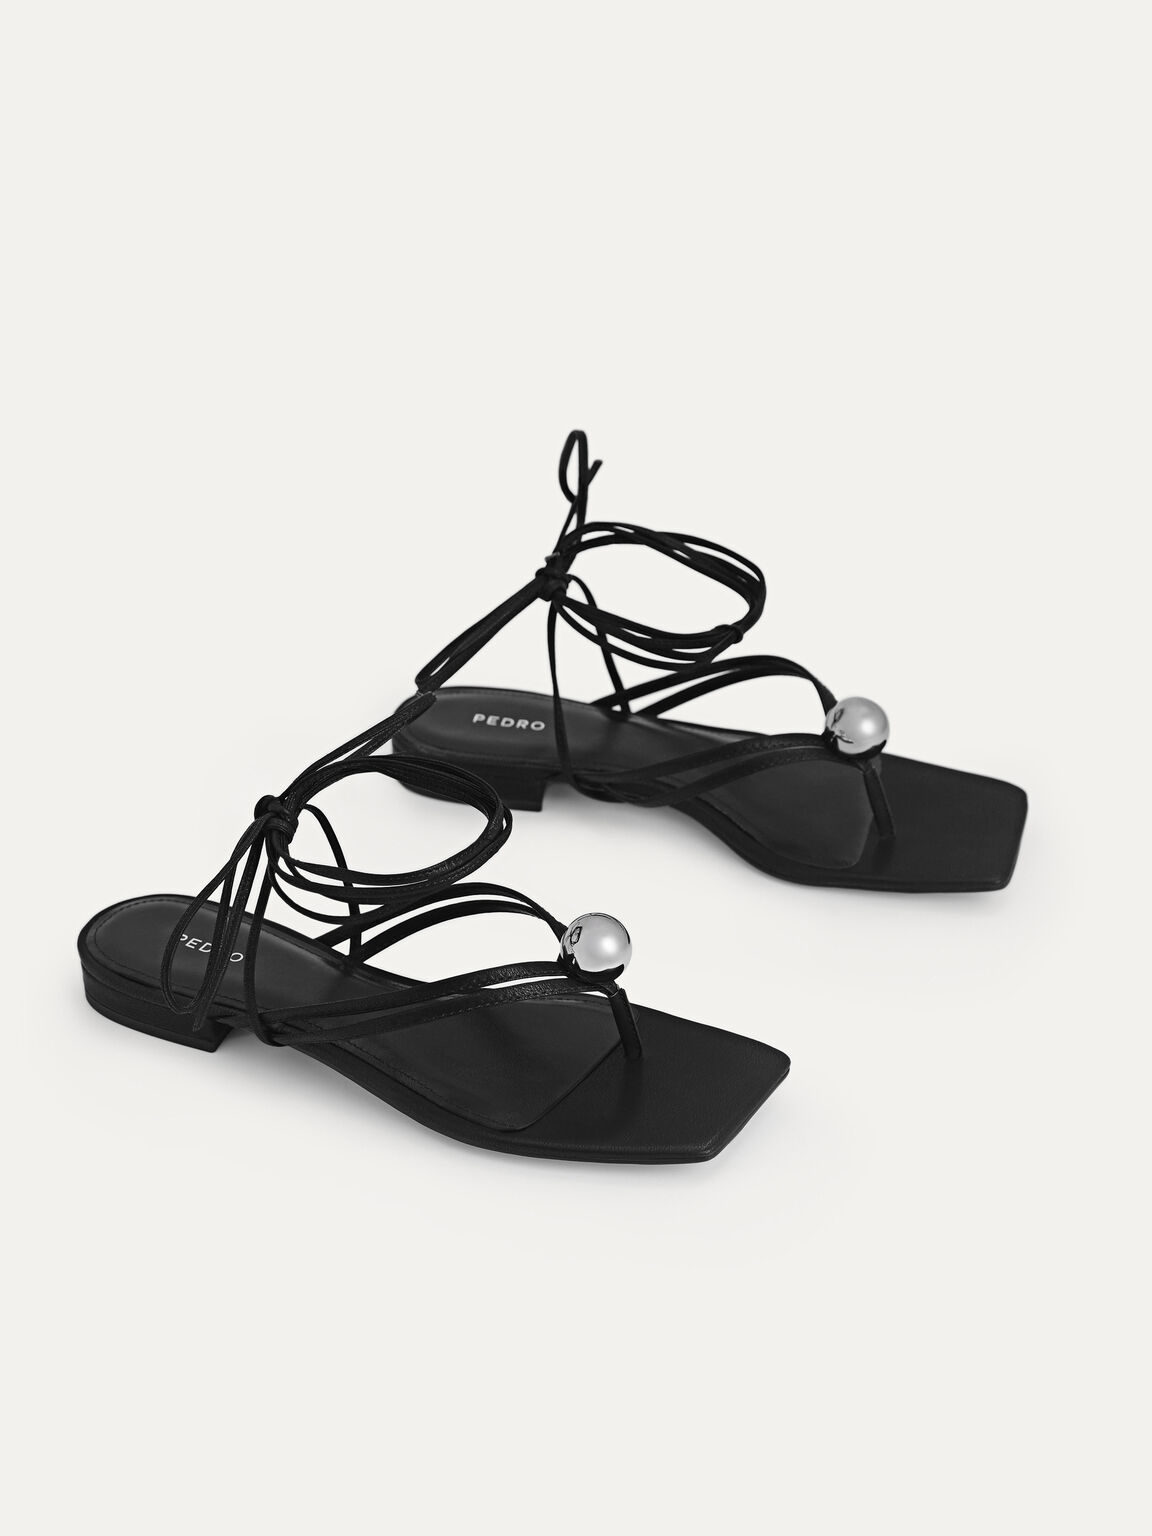 Orb Lace-Up Sandals, Black